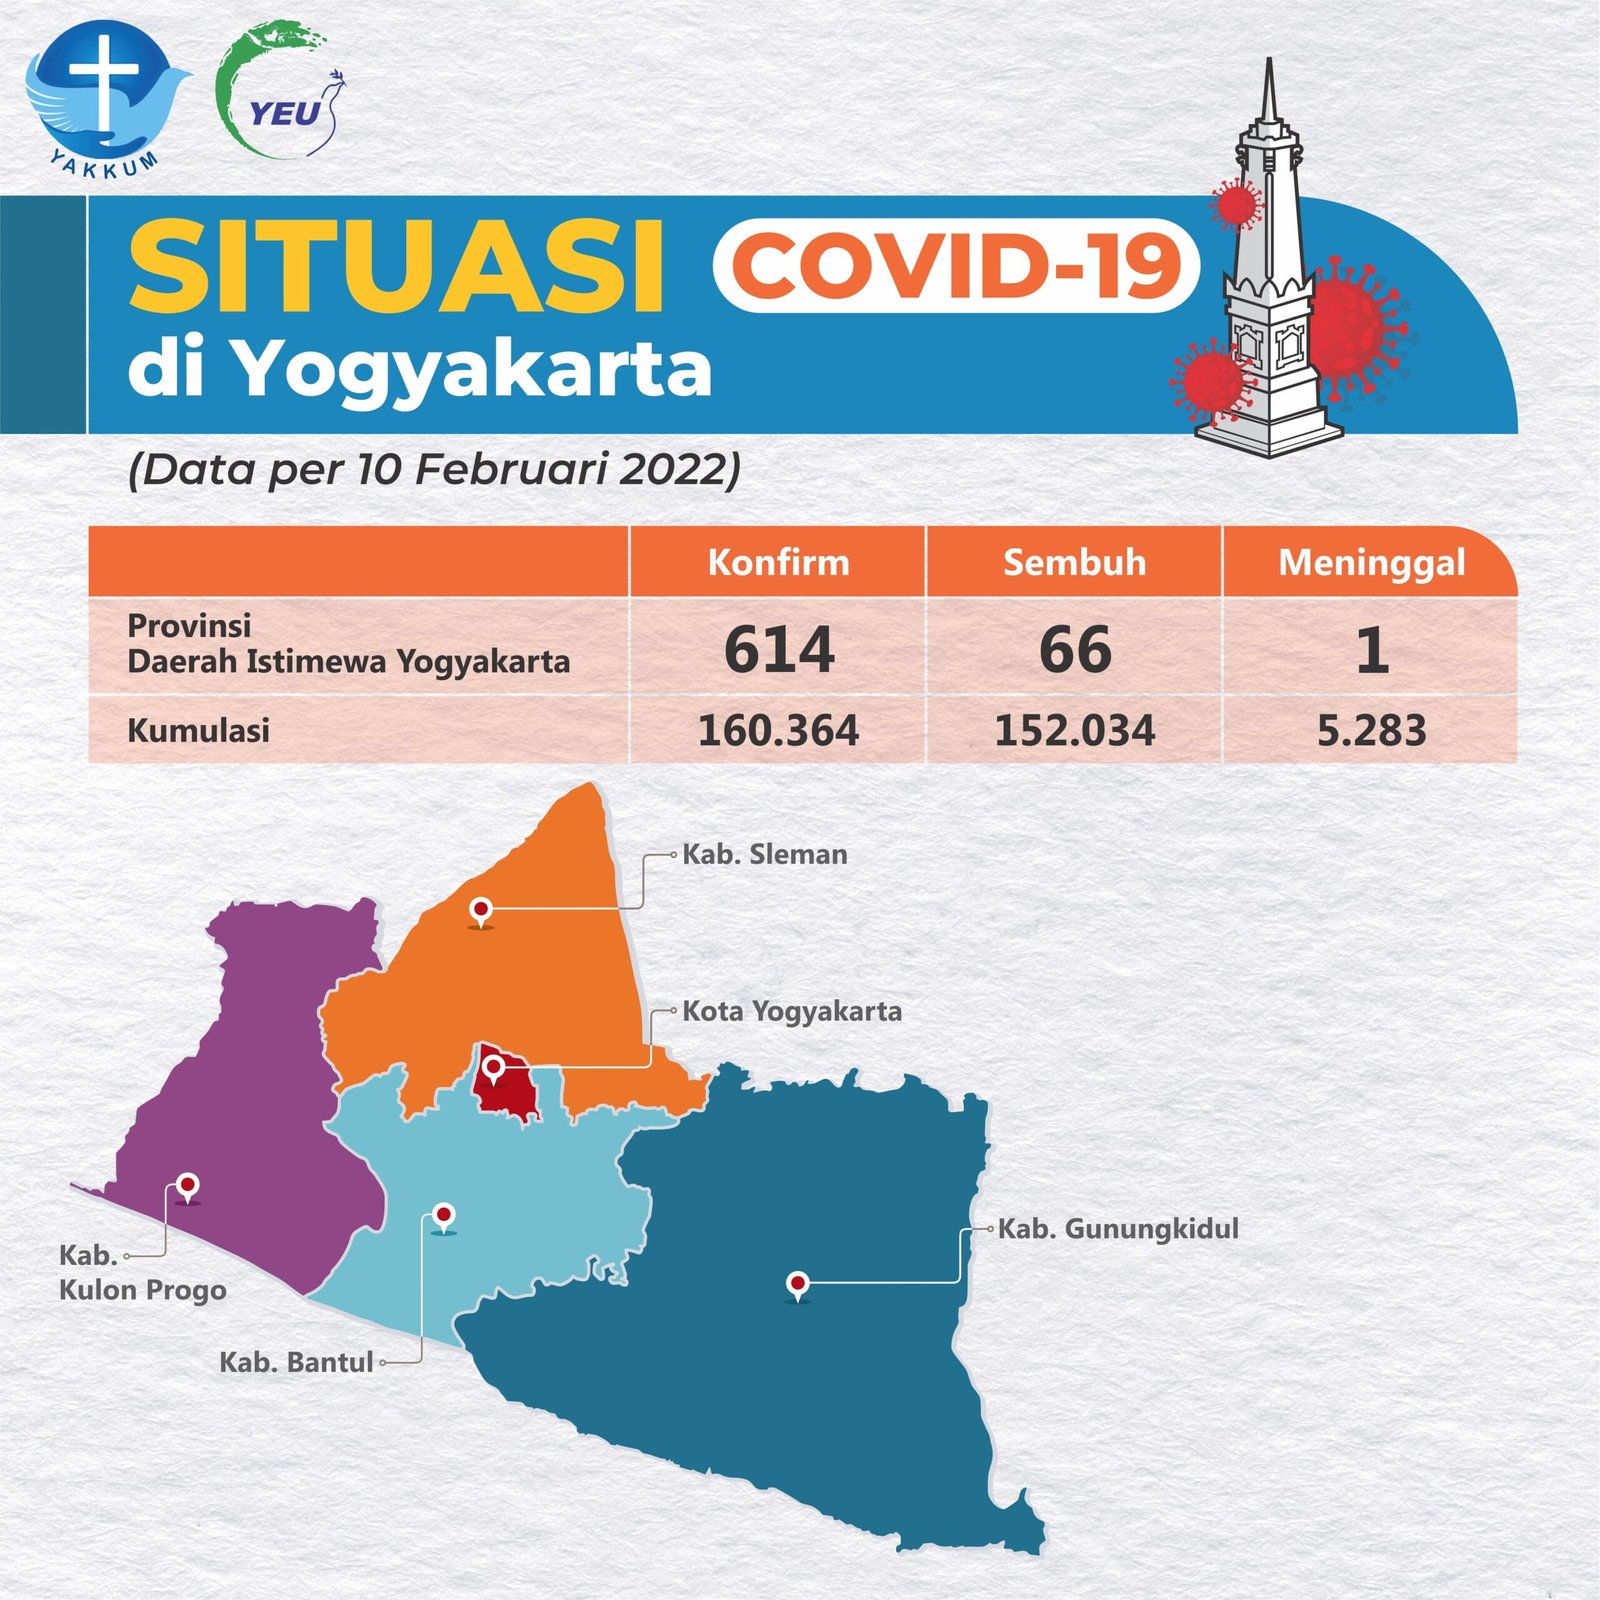 Infographic Situasi Covid-19 di Yogyakarta 1